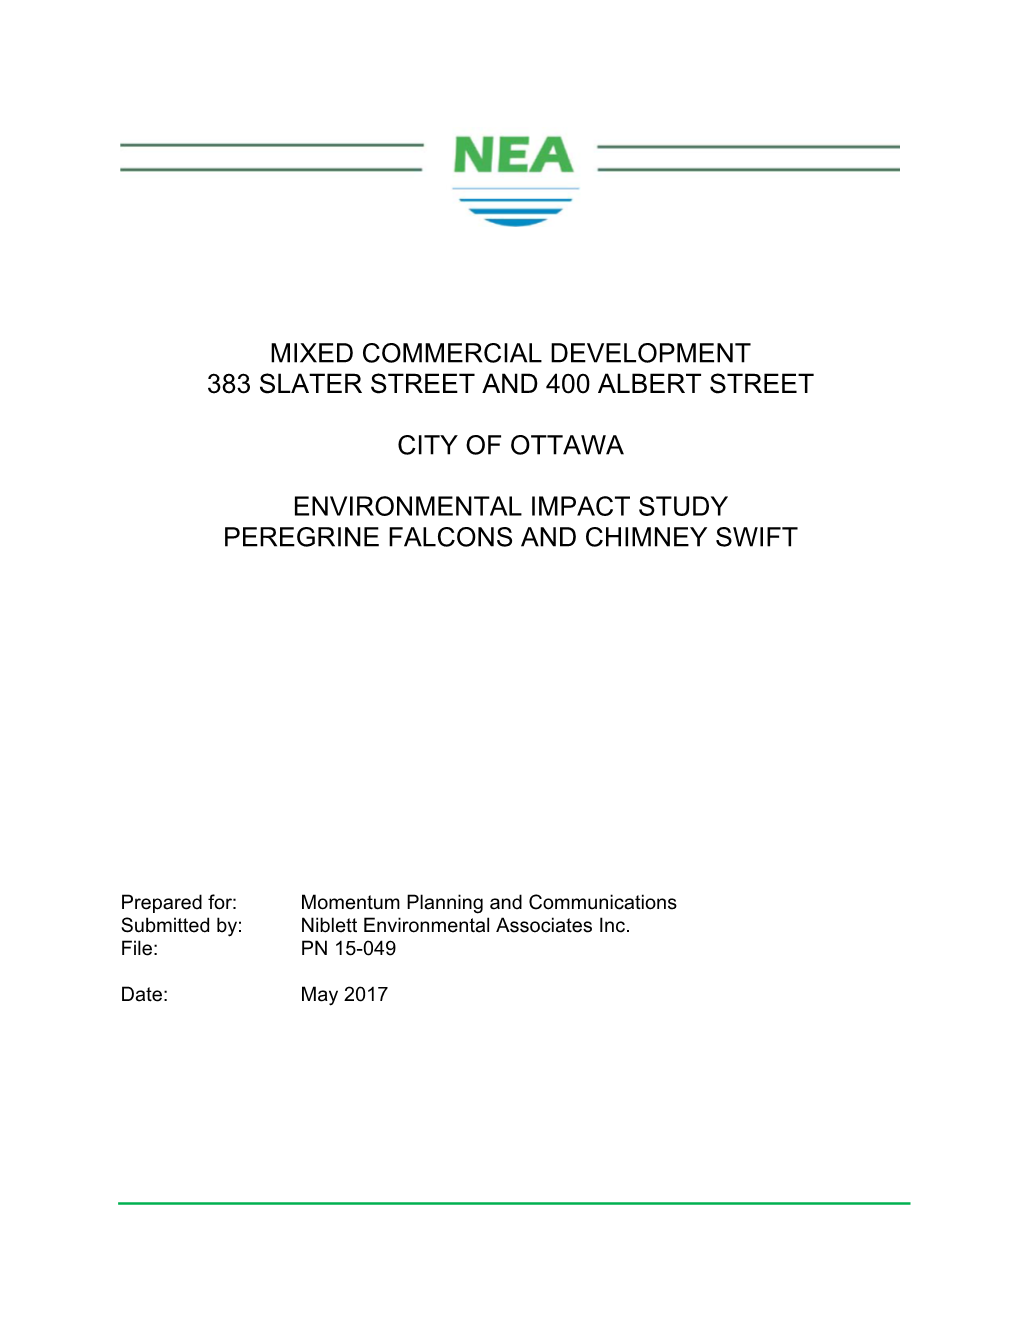 2017-07-07 Environmental Impact Statement